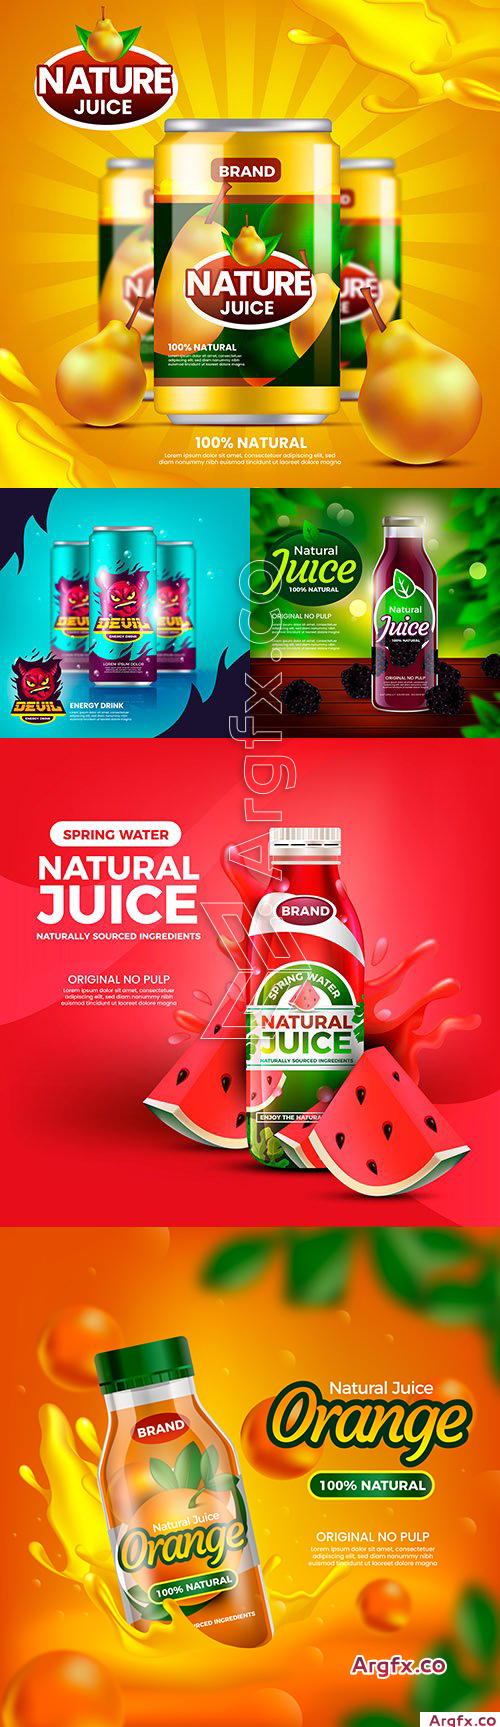 Natural fruit juice and energetic beverage illustration